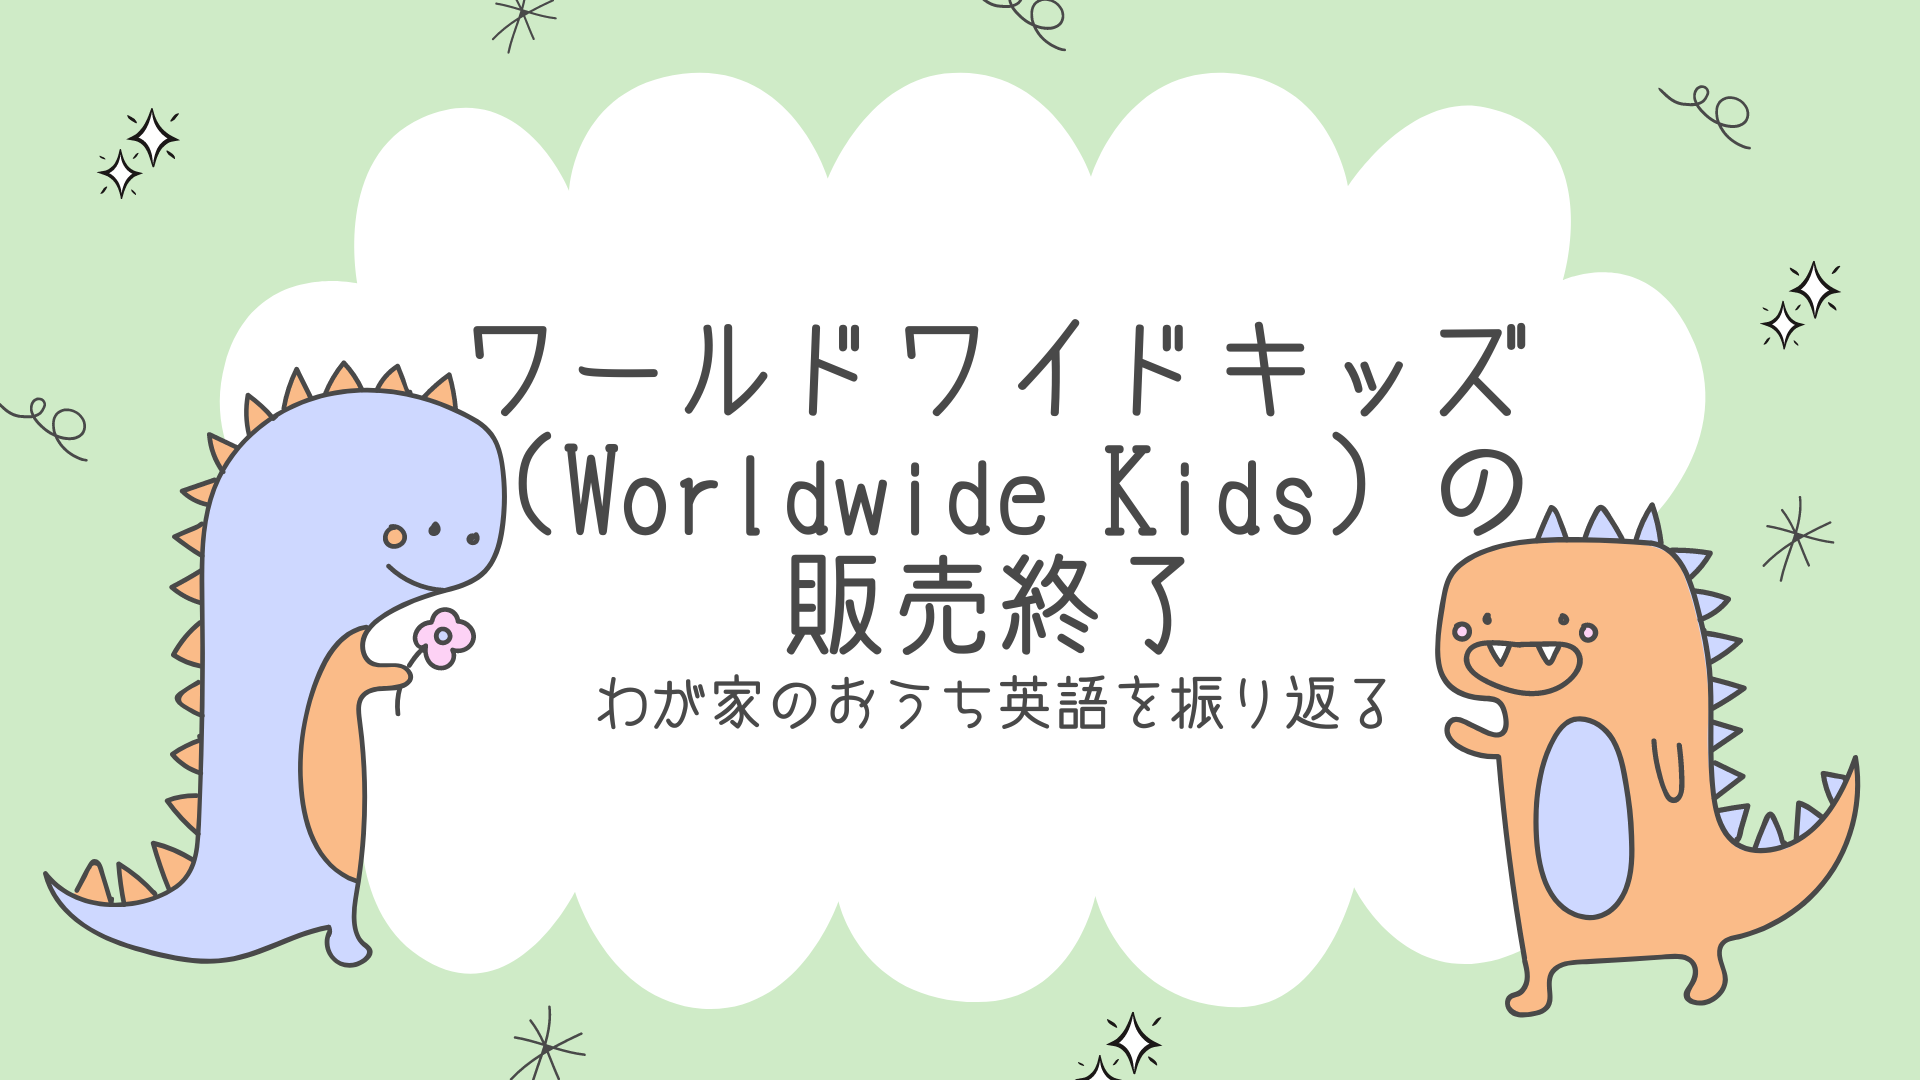 World wide kidsワールドワイドキッズ